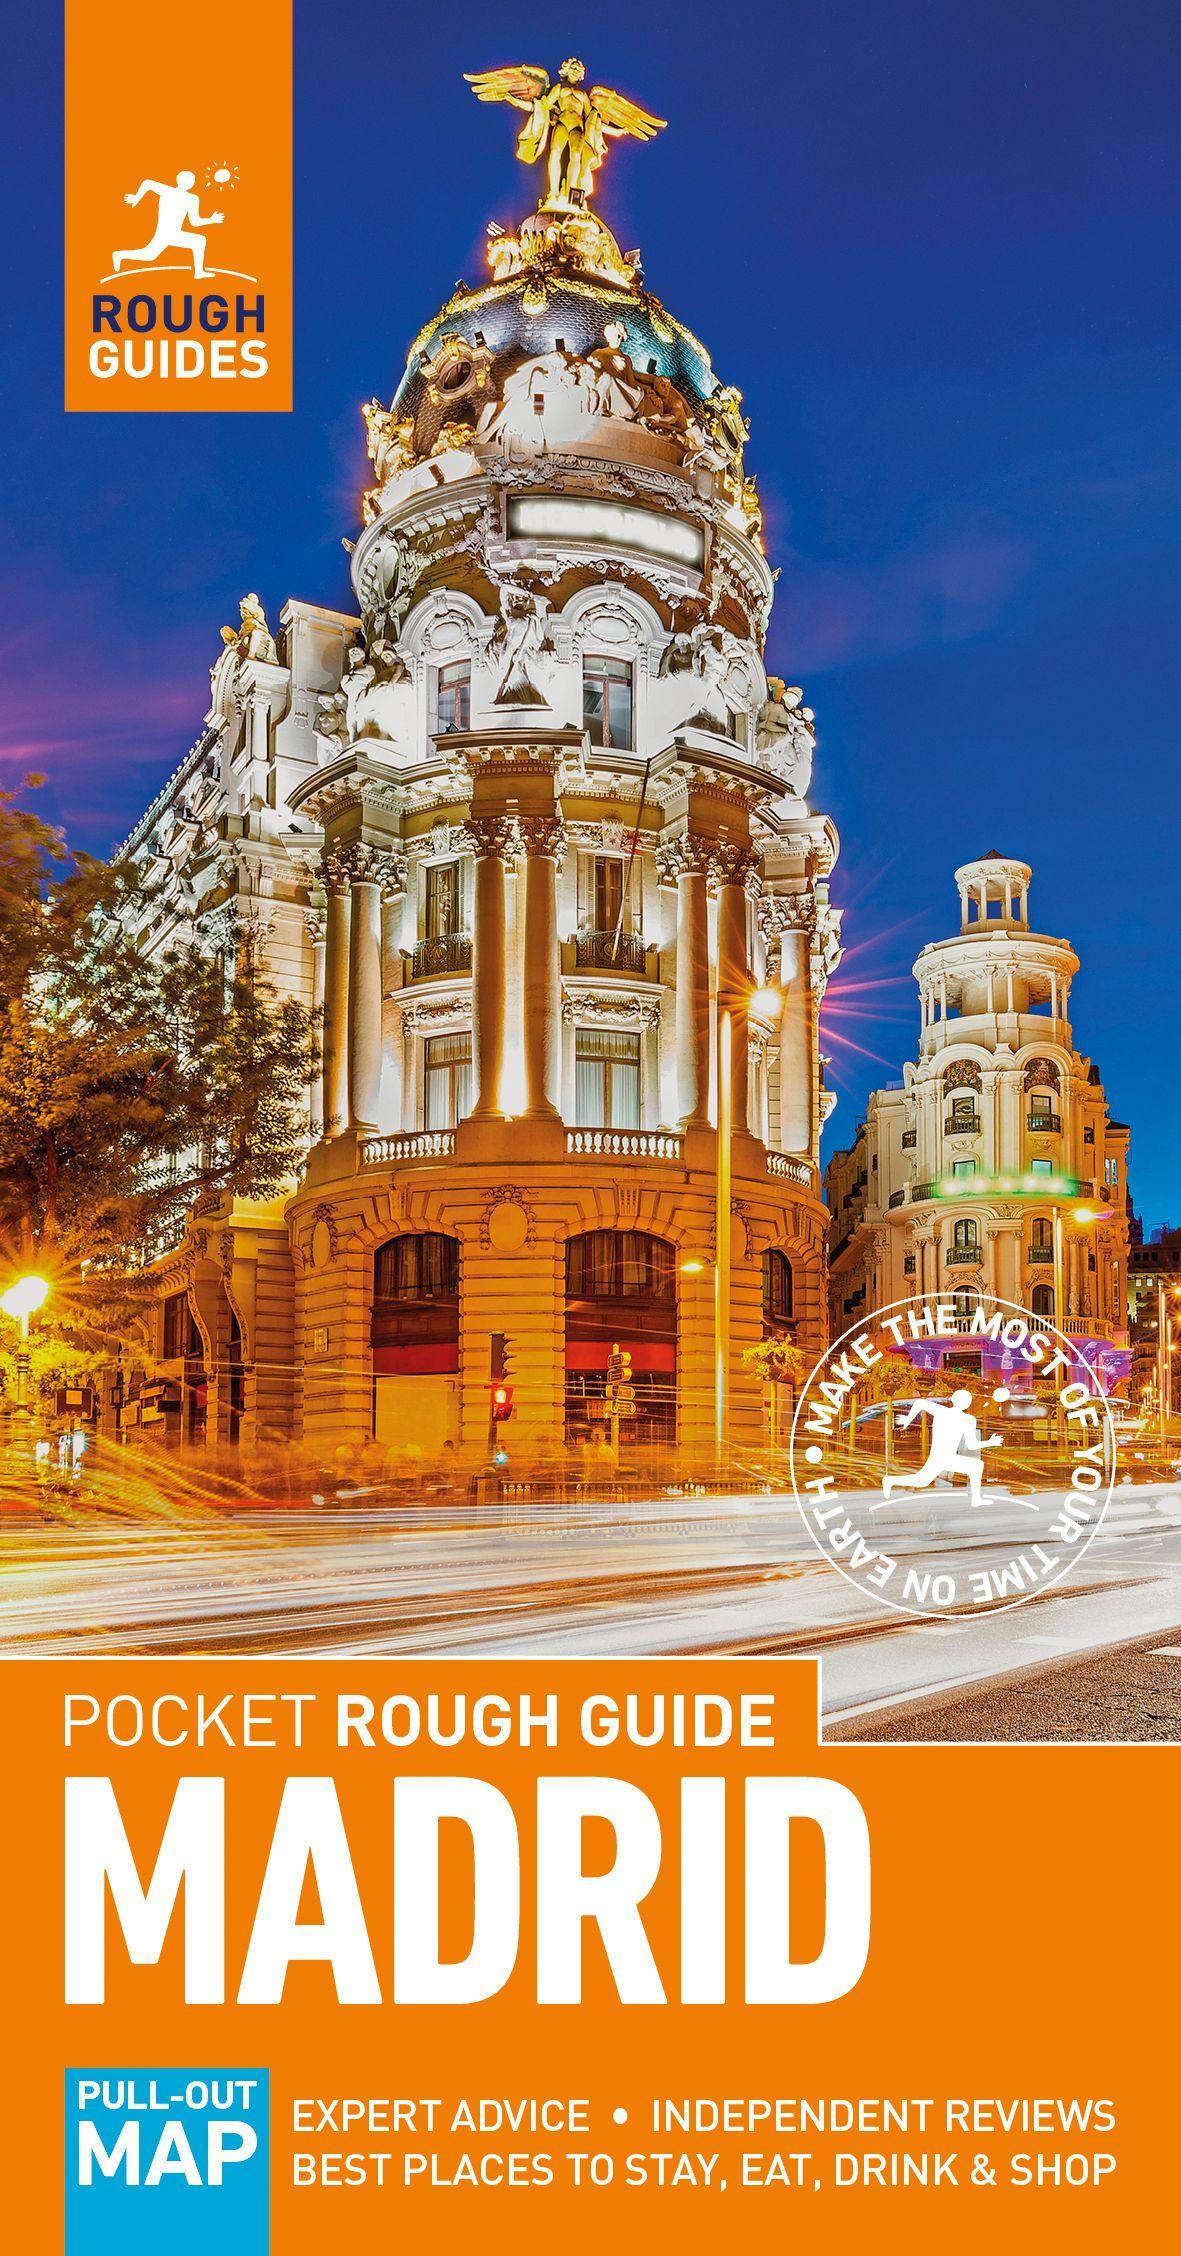 Pocket Rough Guide Madrid (Travel Guide) / Rough Guides / Taschenbuch / Kartoniert / Broschiert / Englisch / 2018 / APA Publications Ltd / EAN 9780241306277 - Guides, Rough